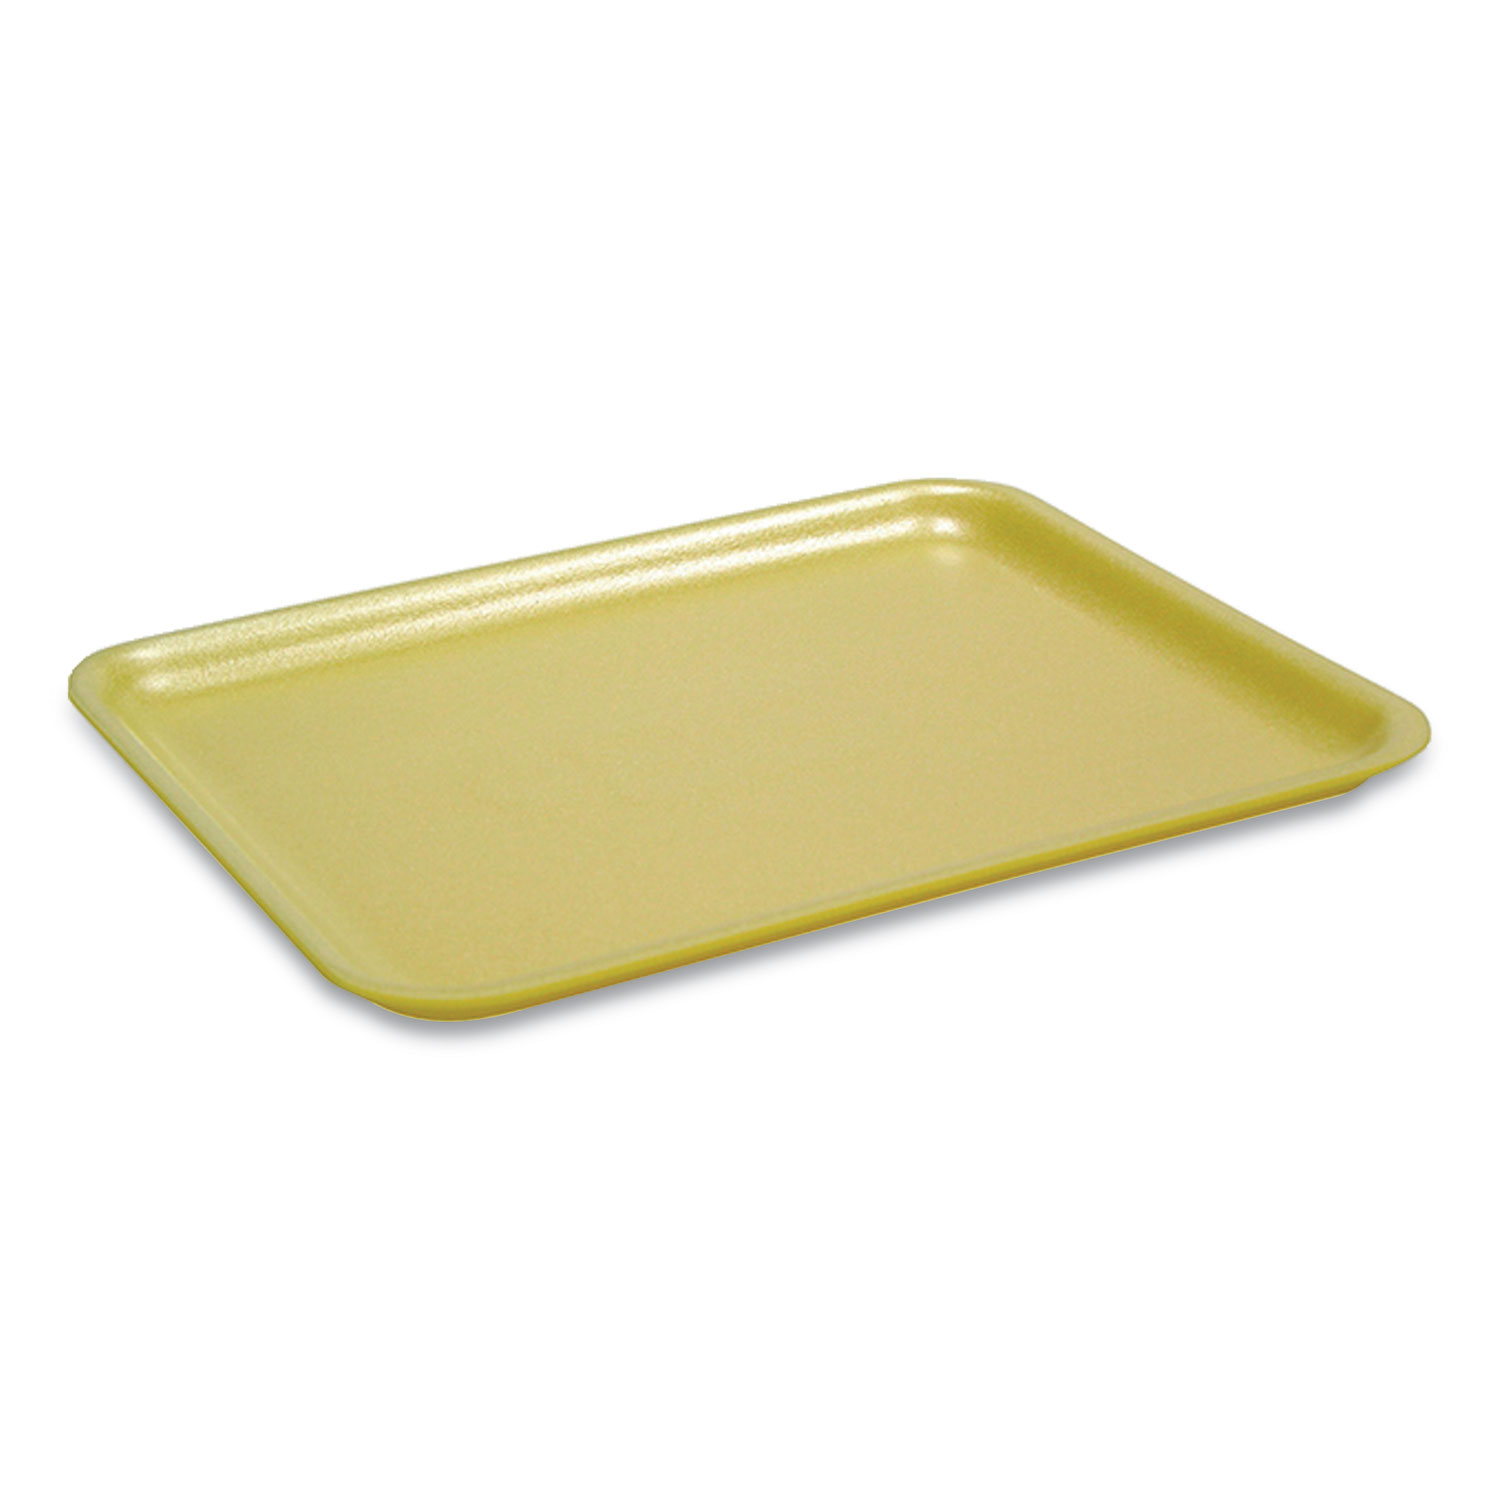  Pactiv 51P302 Supermarket Trays, #2, 8.38 x 5.88 x 1.21, Yellow, 500/Carton (PCT51P302) 